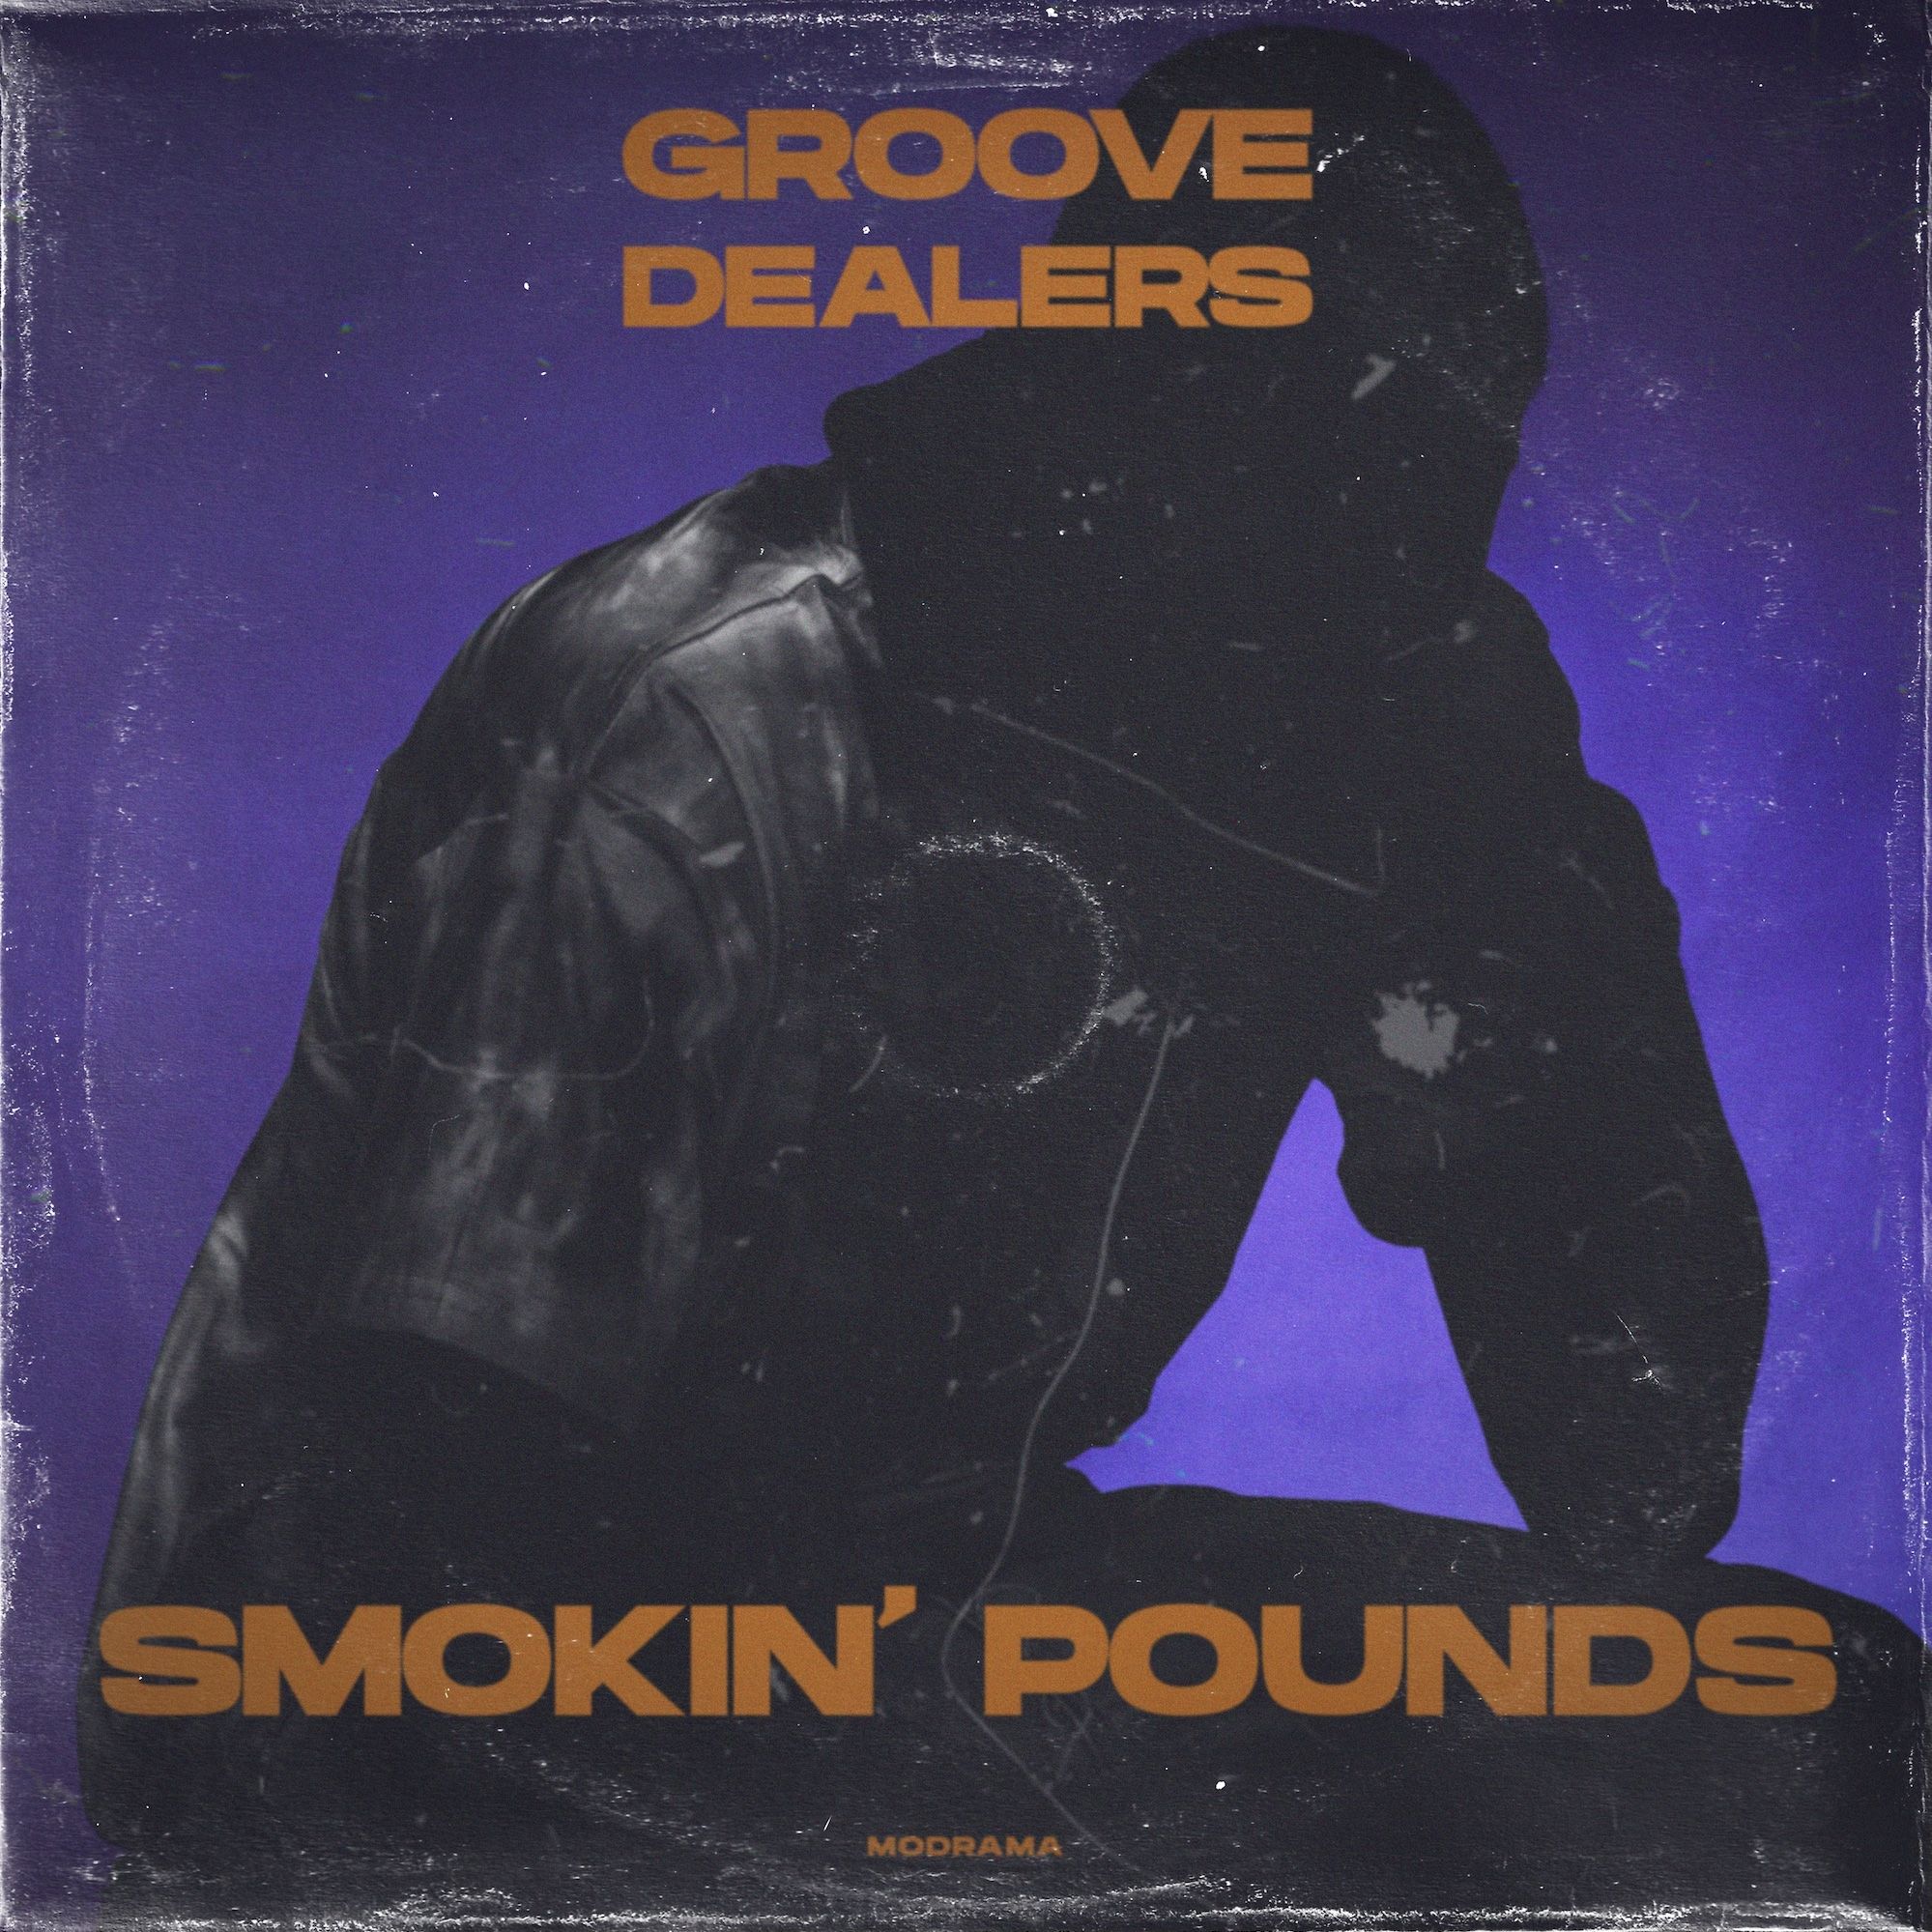 Download Smokin' Pounds